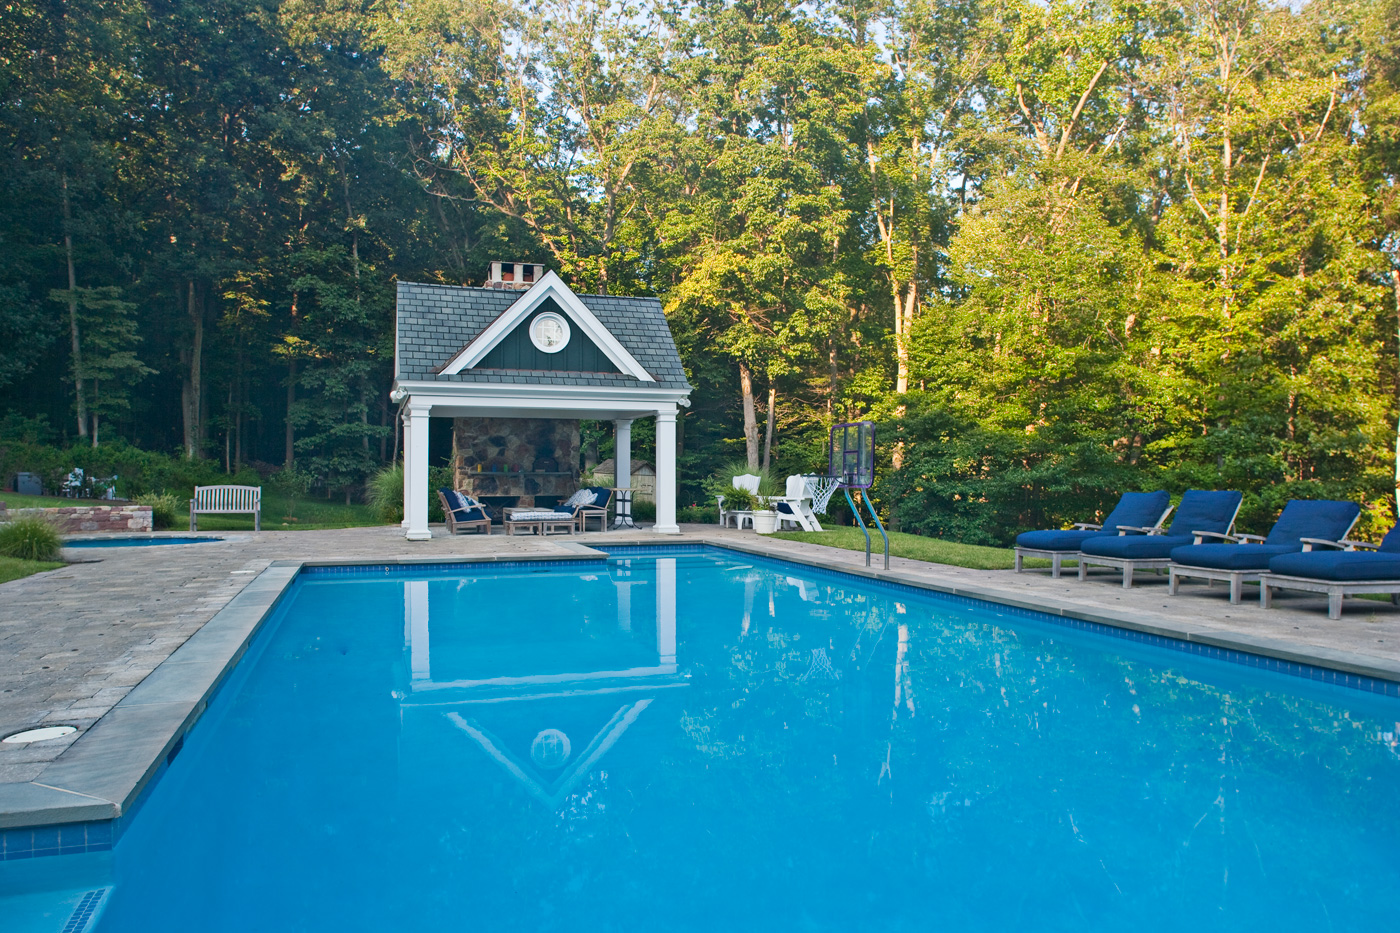 Formal Swimming Pool - NJ Landscaping